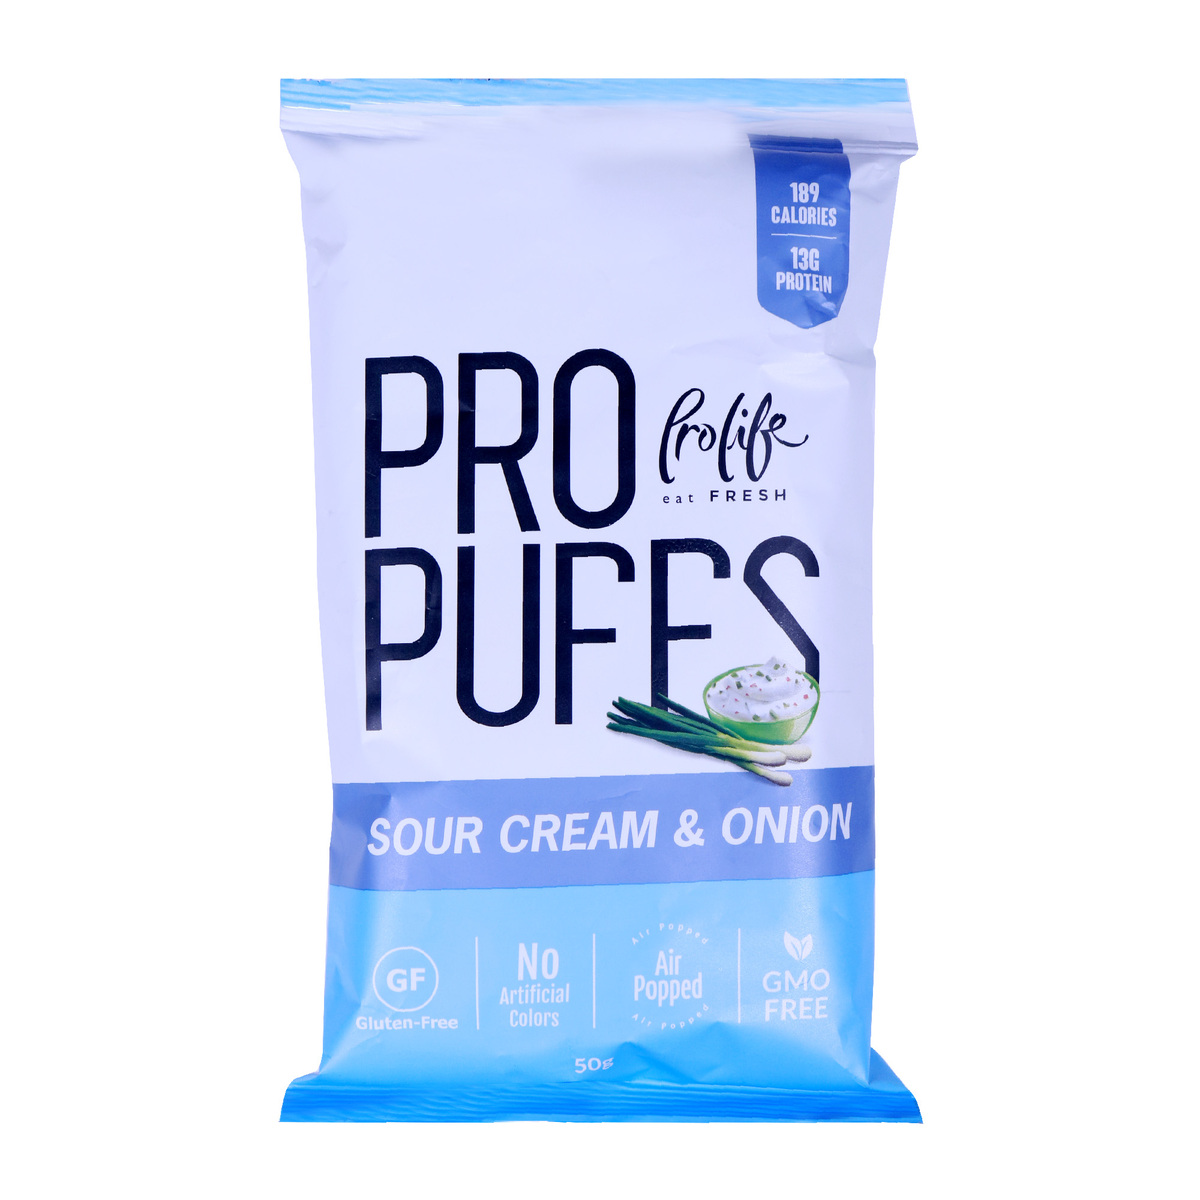 Prolife Pro Puffs Sour Cream & Onion 50g Online at Best Price | Health ...